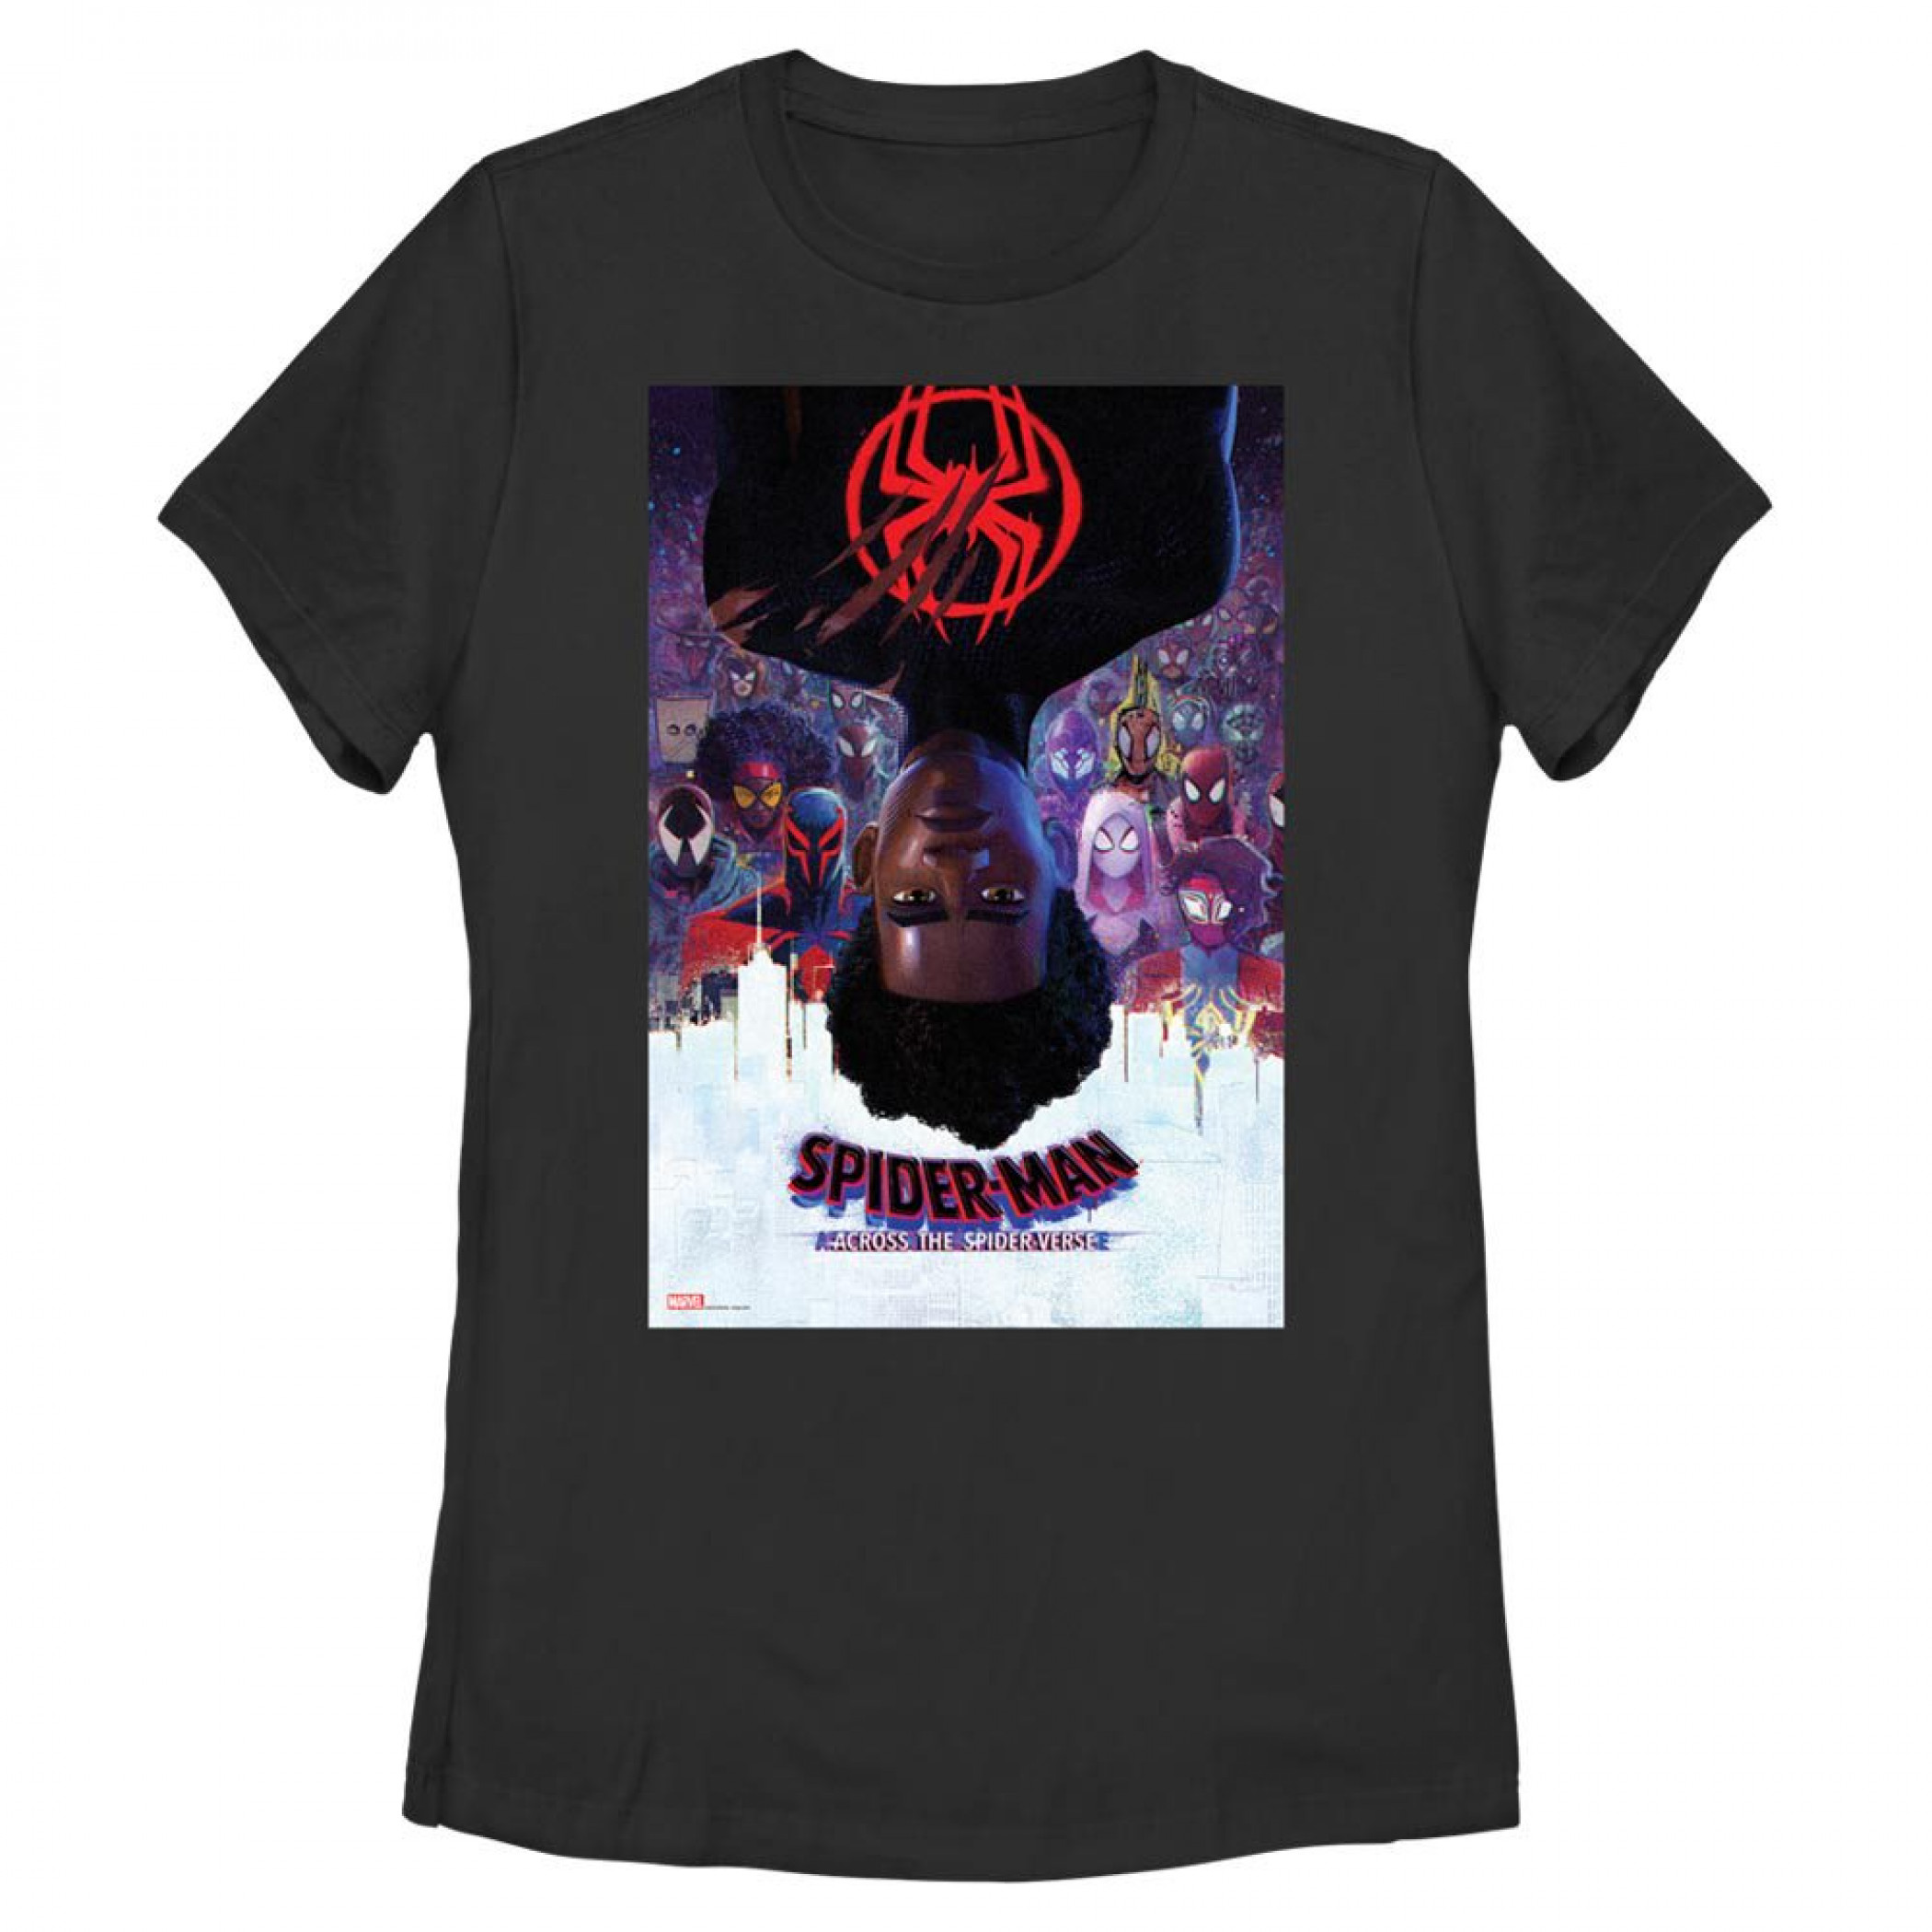 Spider-Man Across The Spider-Verse Poster Women's T-Shirt